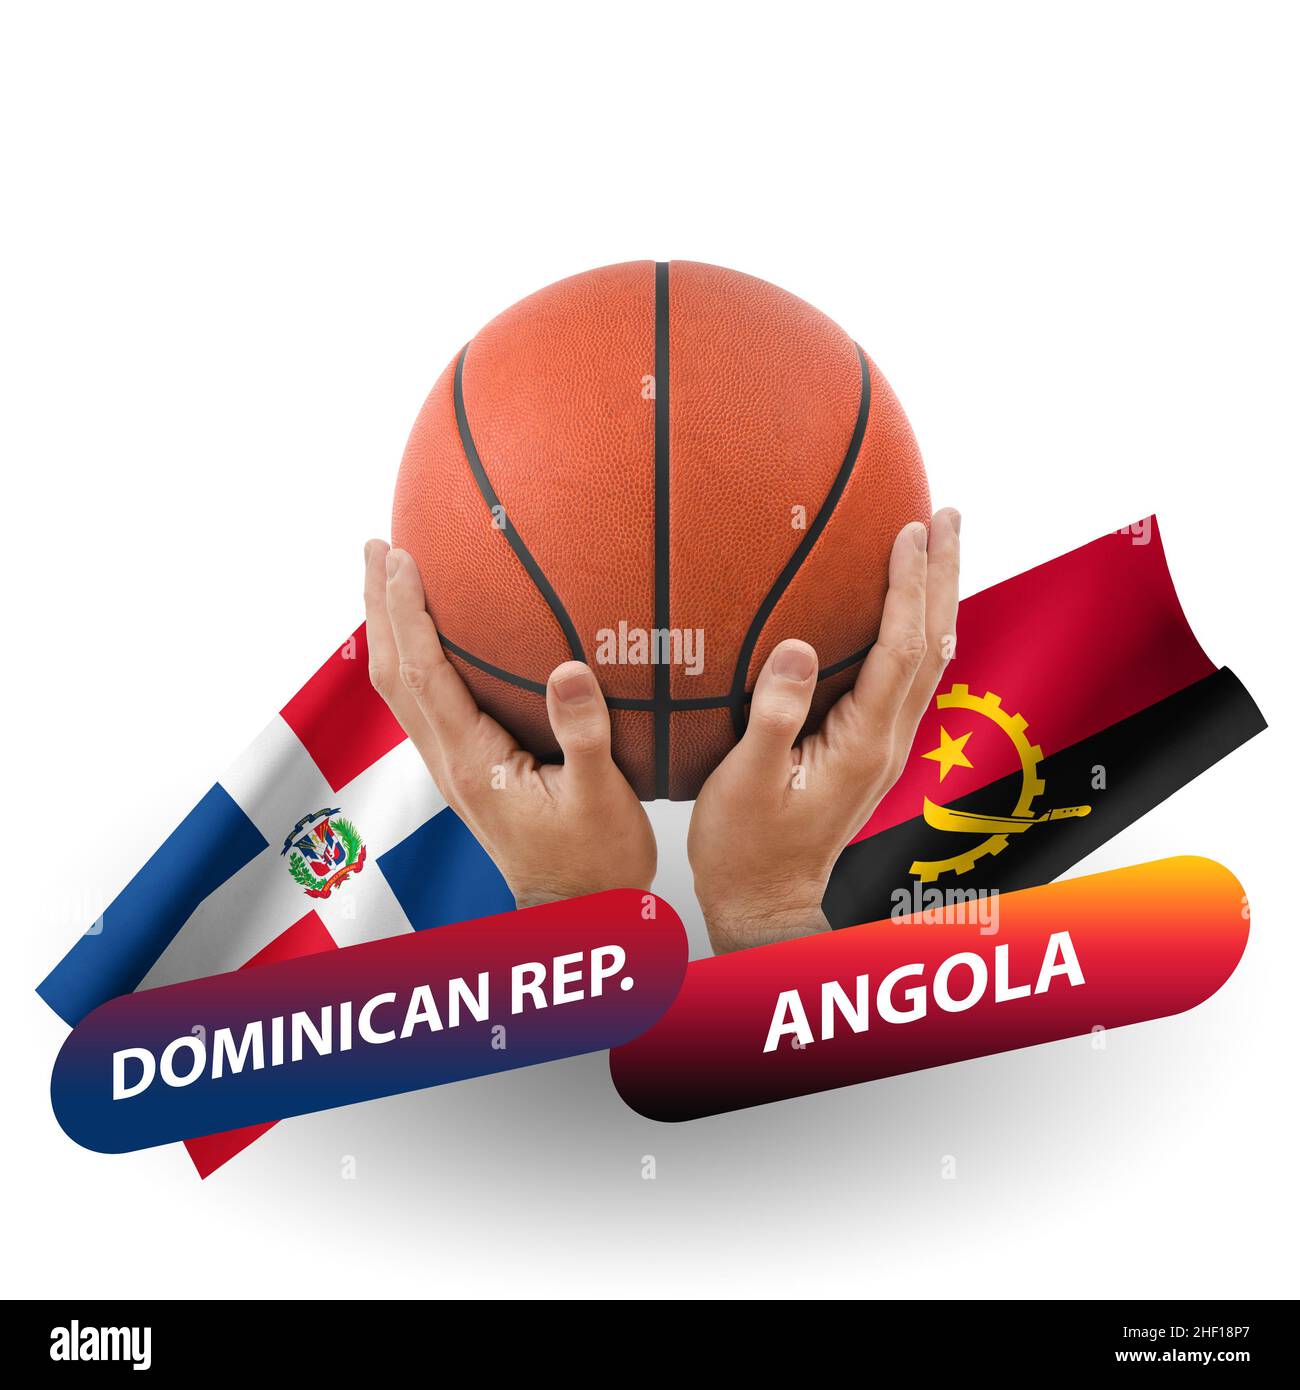 Republica dominicana vs angola